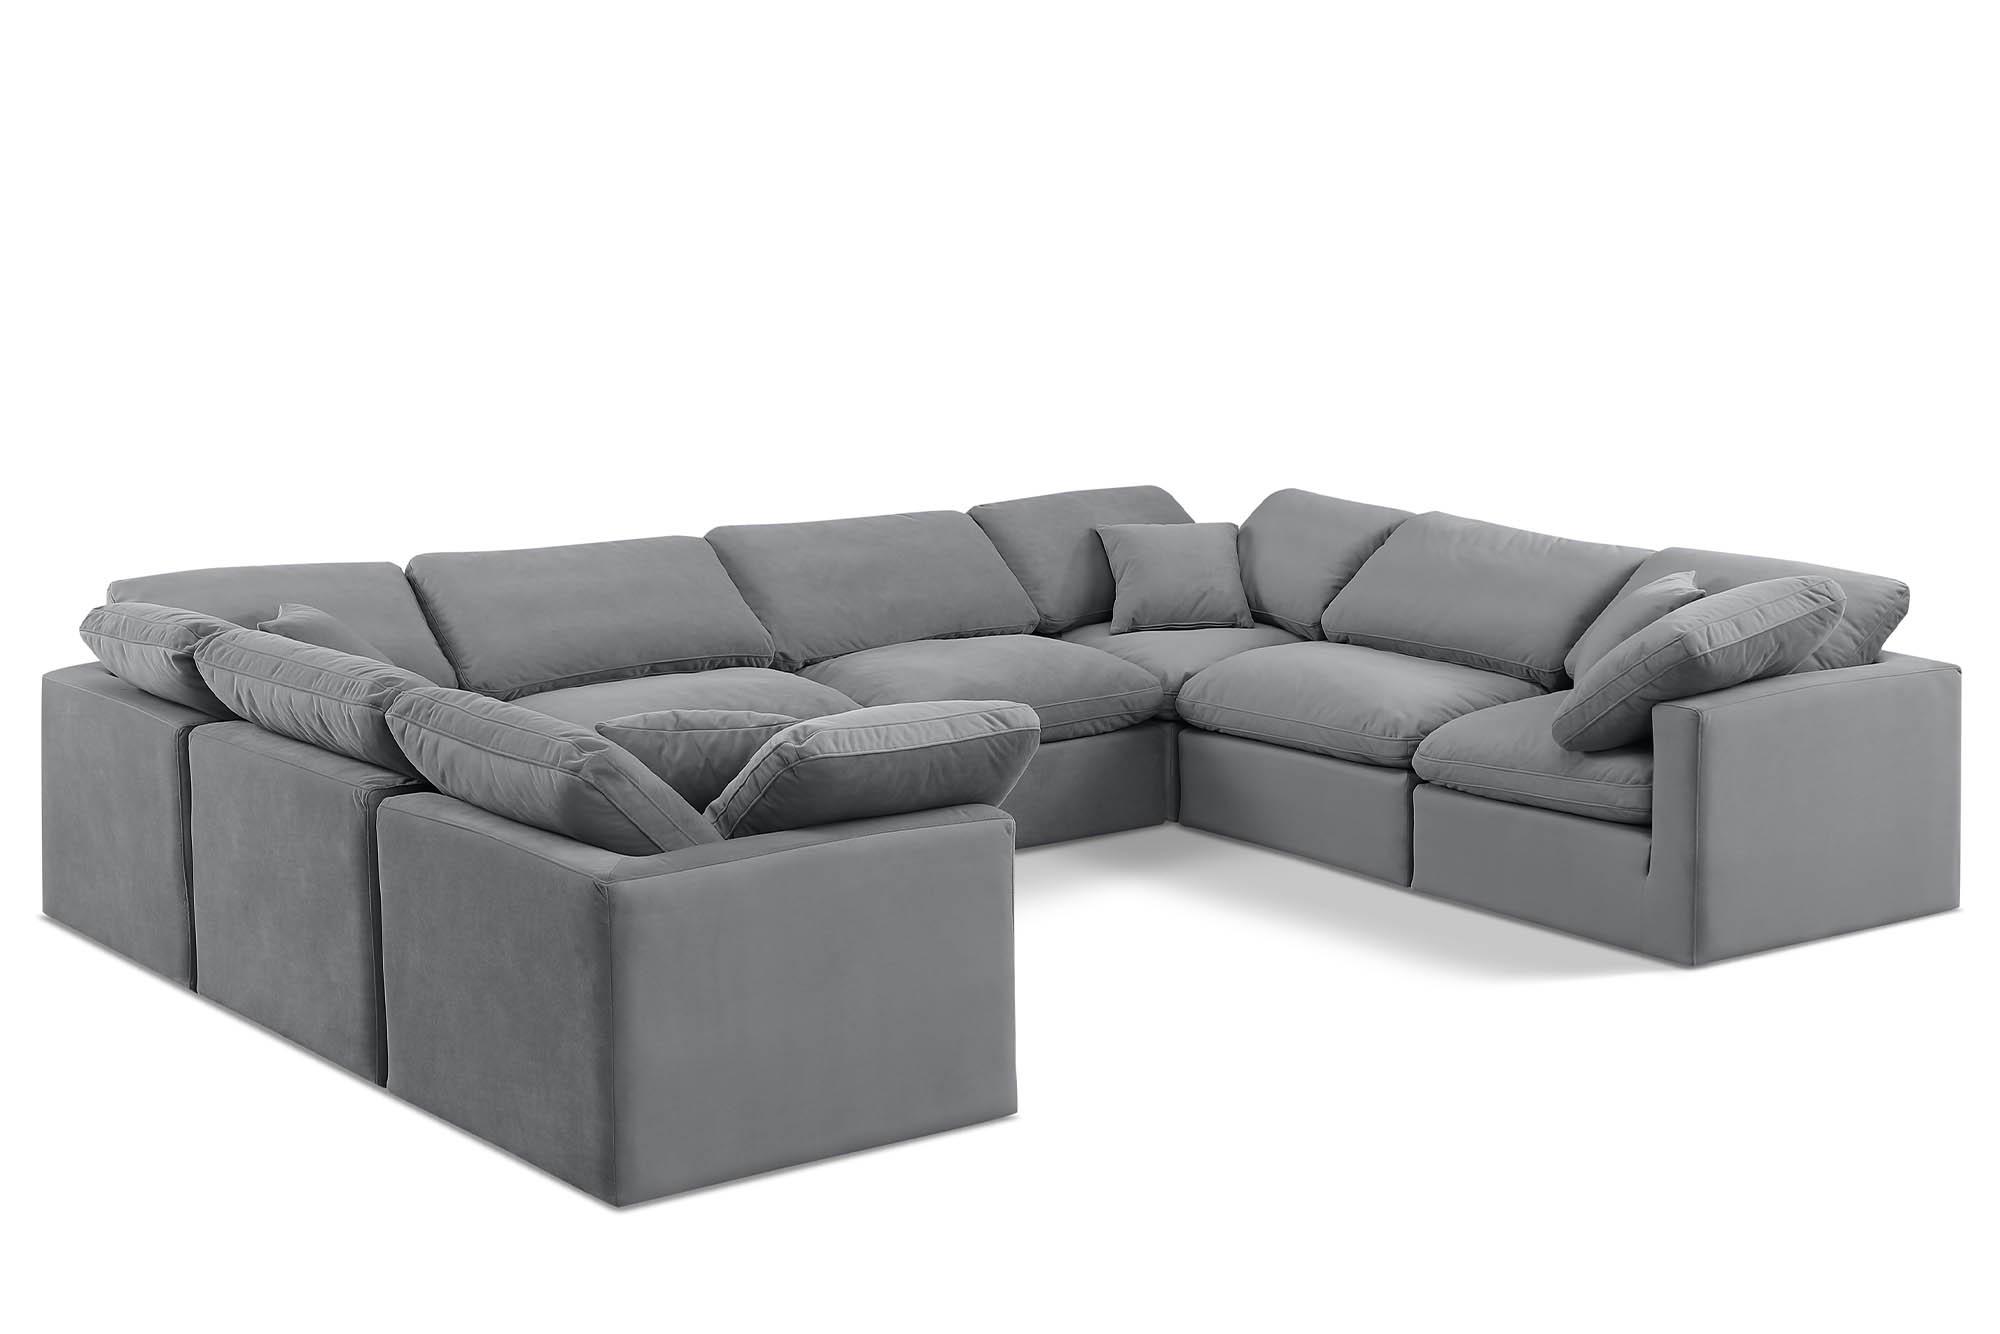 Contemporary, Modern Modular Sectional Sofa INDULGE 147Grey-Sec8A 147Grey-Sec8A in Gray Velvet